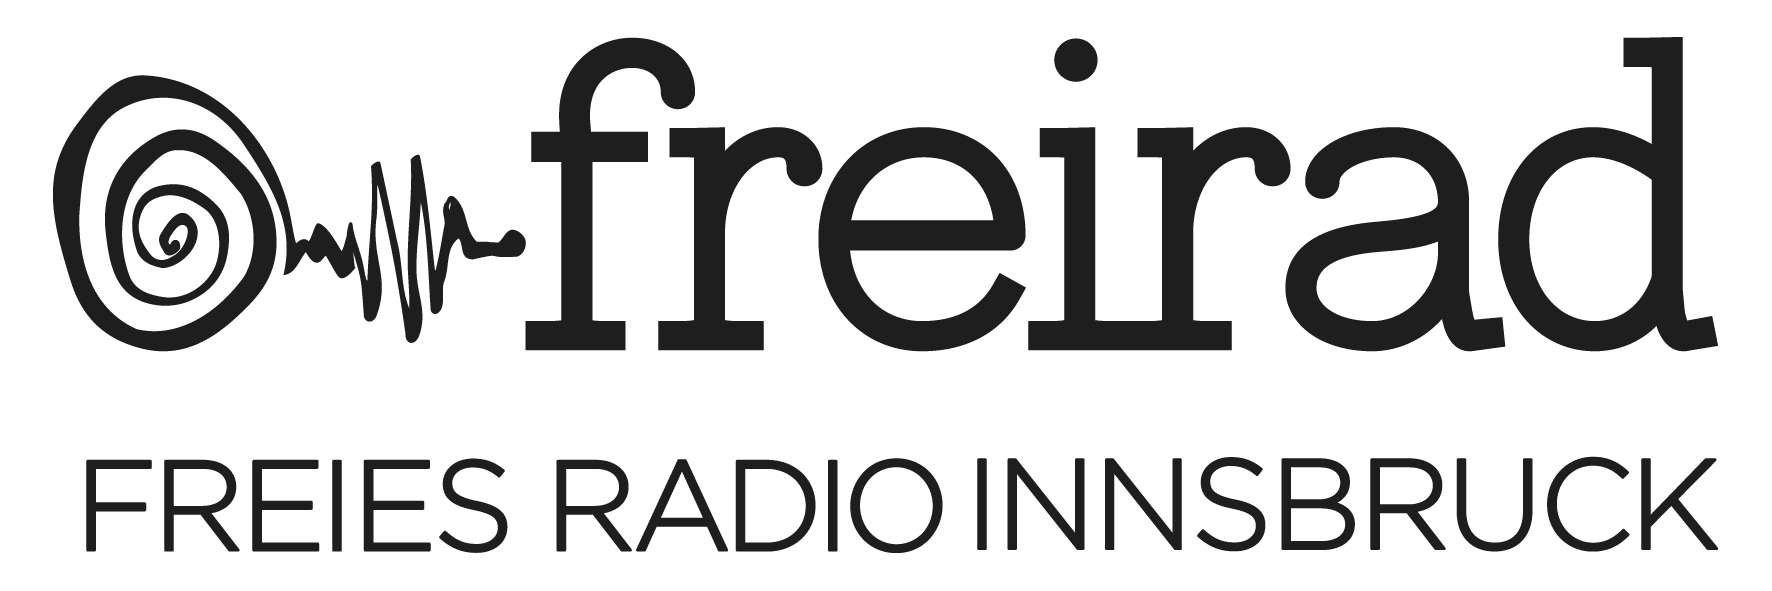 FREIRAD - Freies Radio Innsbruck